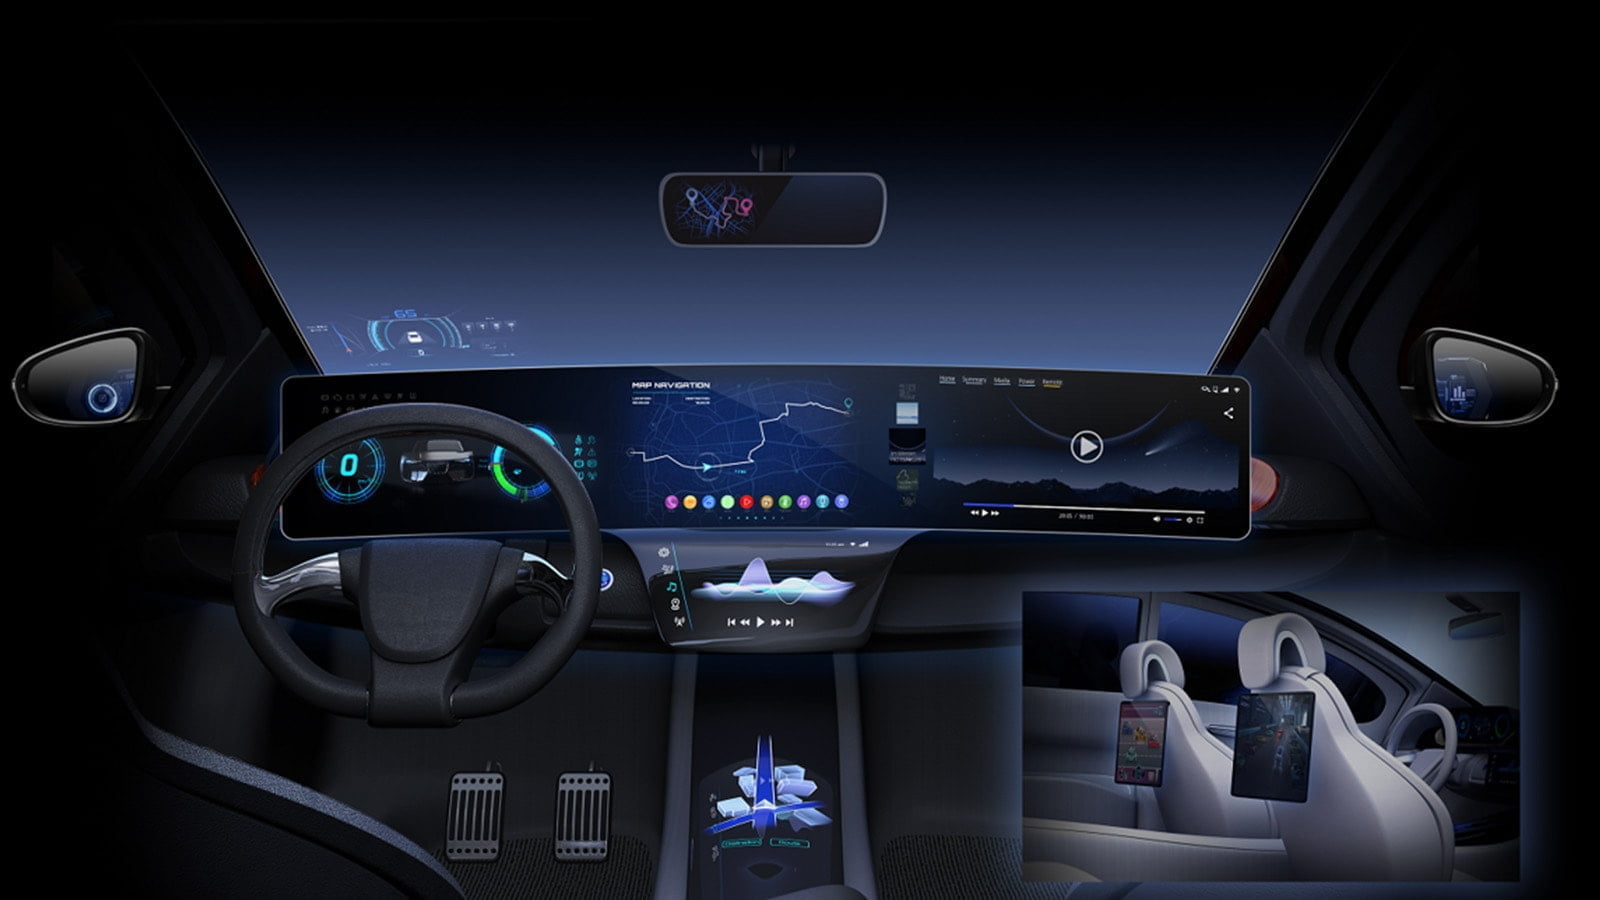 MediaTek to manufacture new AI-powered automotive SoCs with integrated NVIDIA GPU